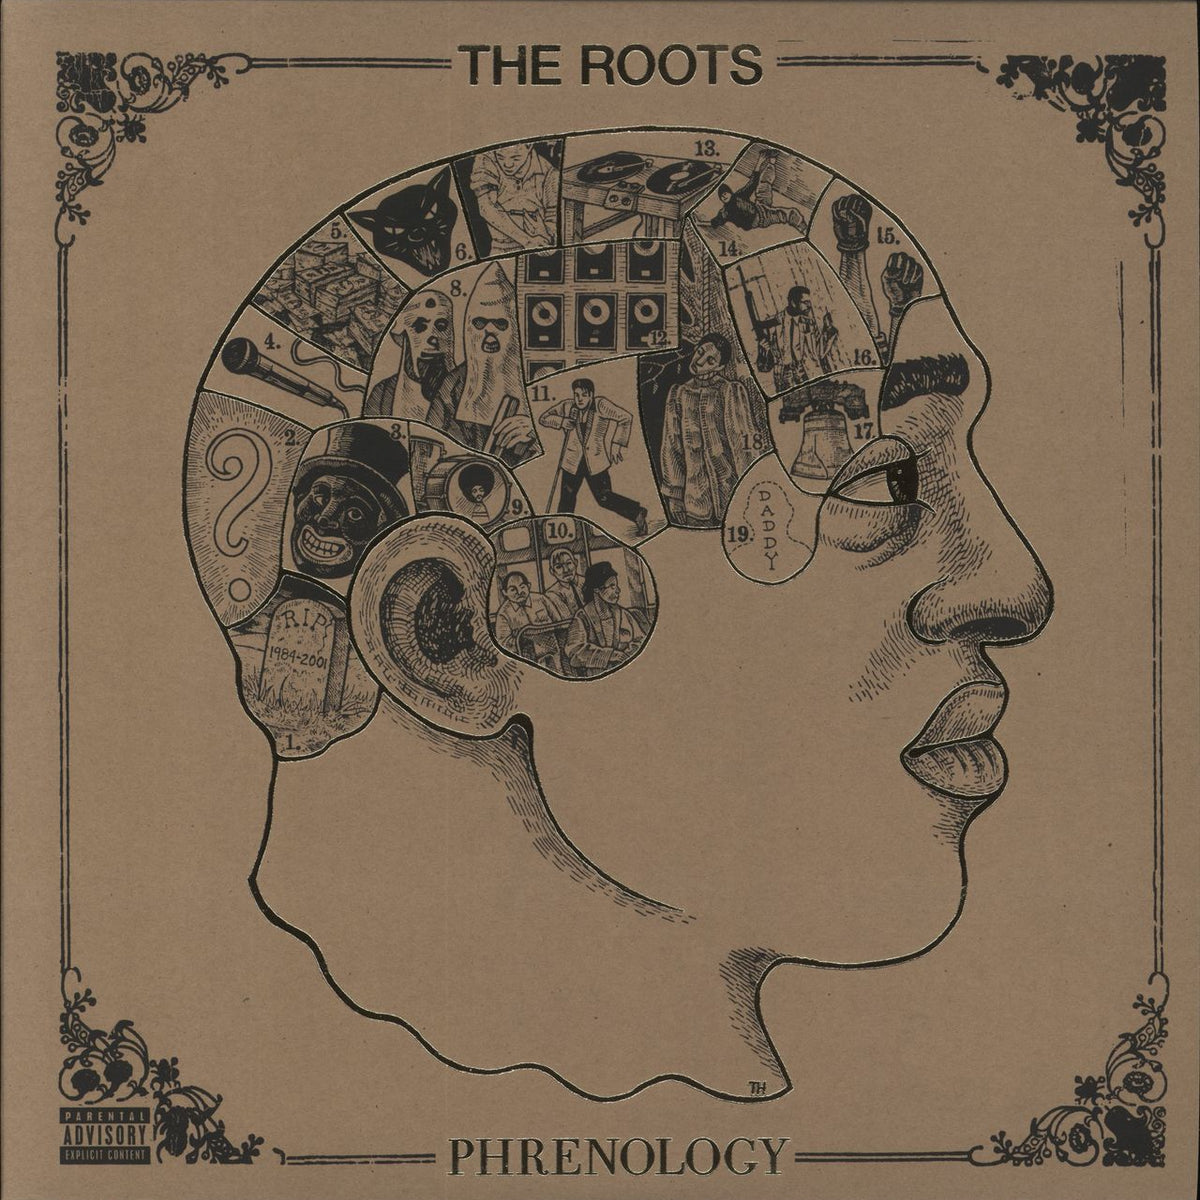 The Roots Phrenology - 180gm Brown Marbled Vinyl US 2-LP vinyl set 